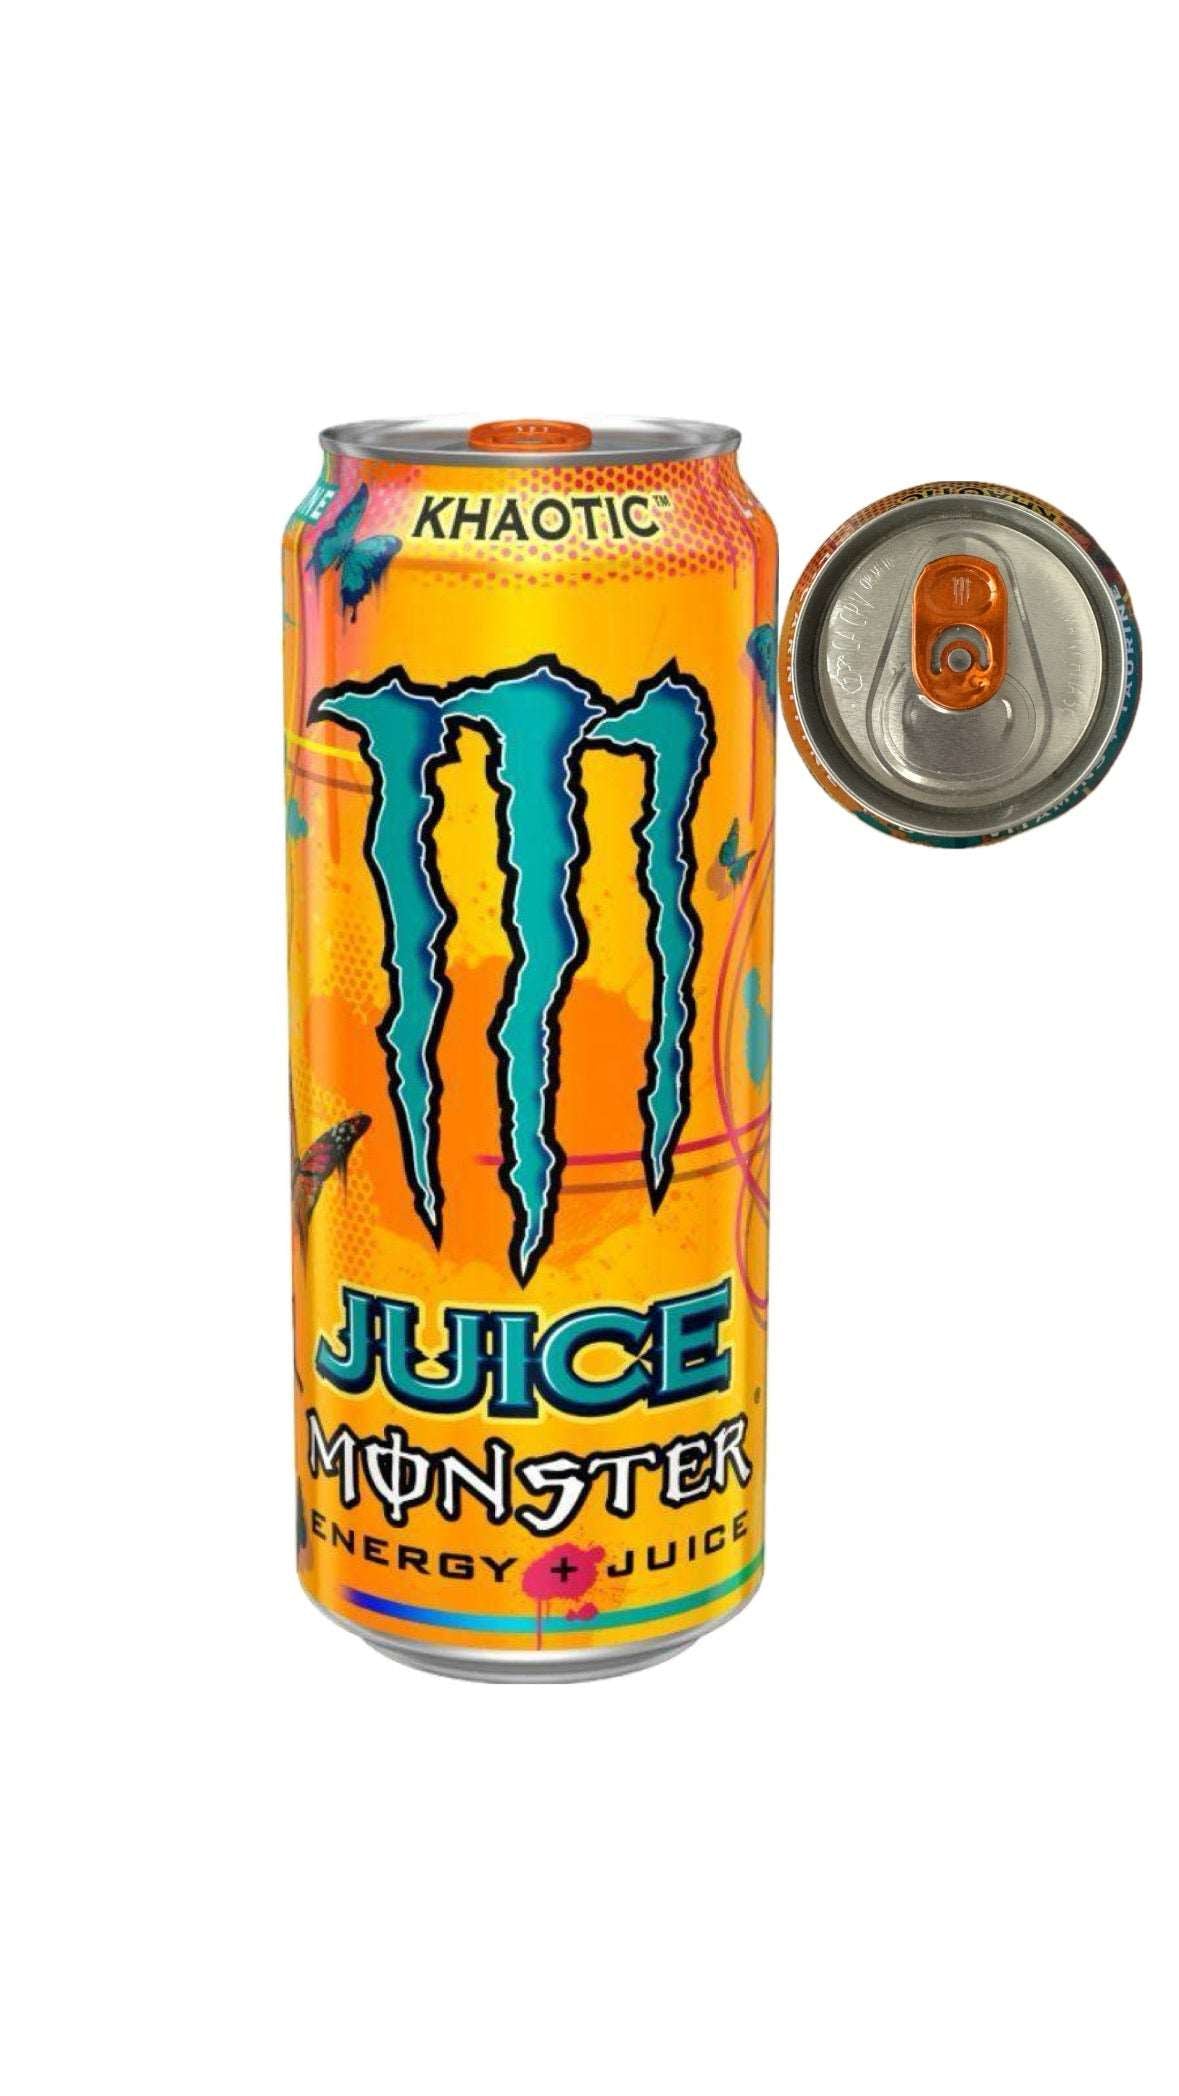 Monster Energy Juice Khaotic USA sku: 0521 N